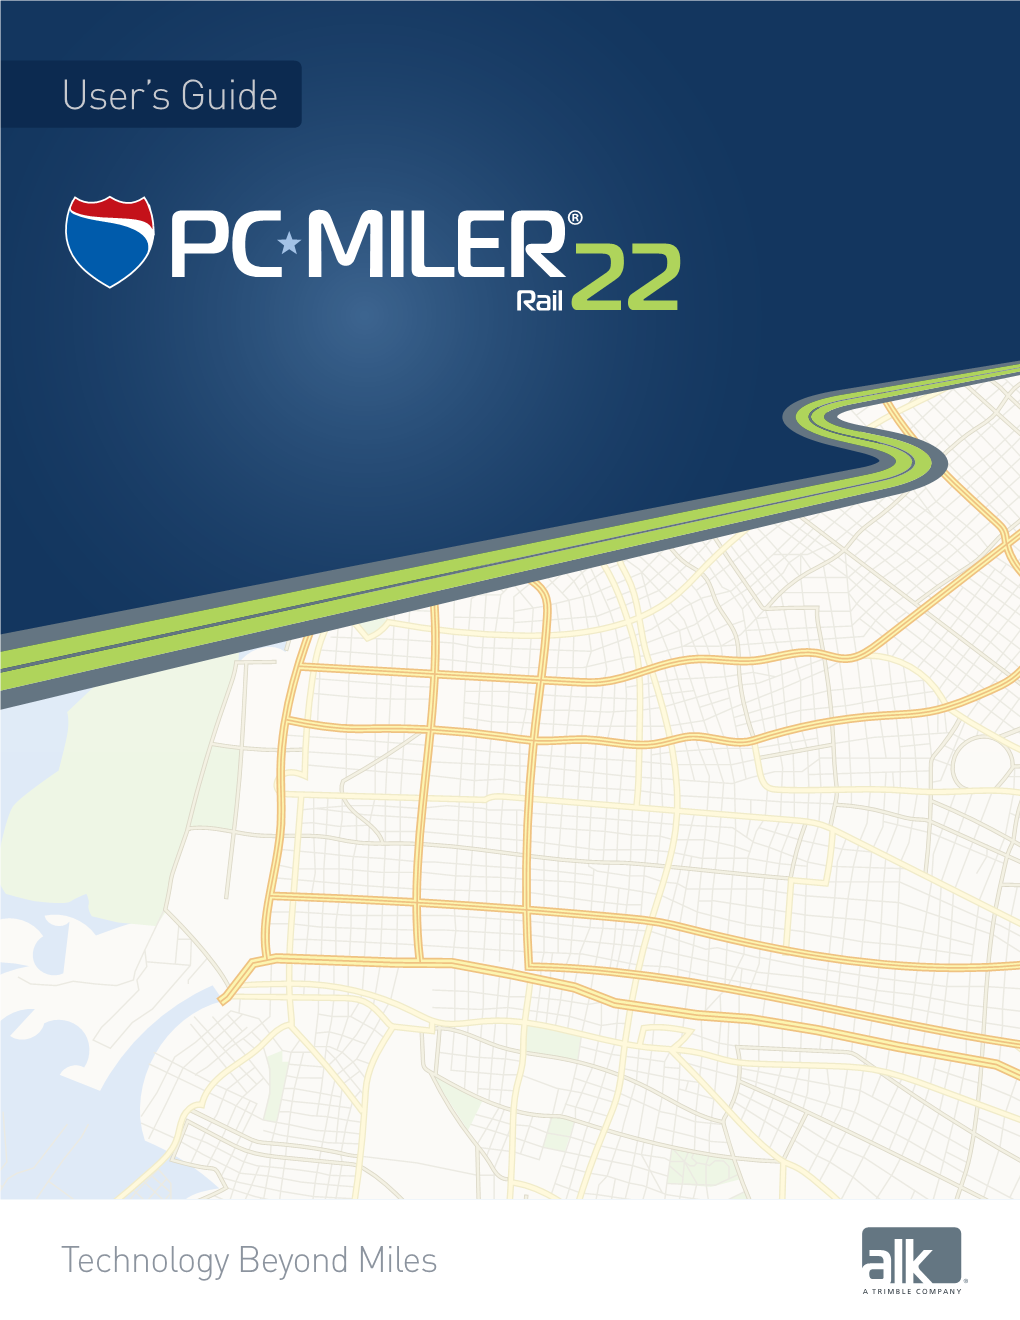 PC*MILER|Rail 22 Software Order…” (Enterprise License Customers Excluded, See Note in Step 4 Below)